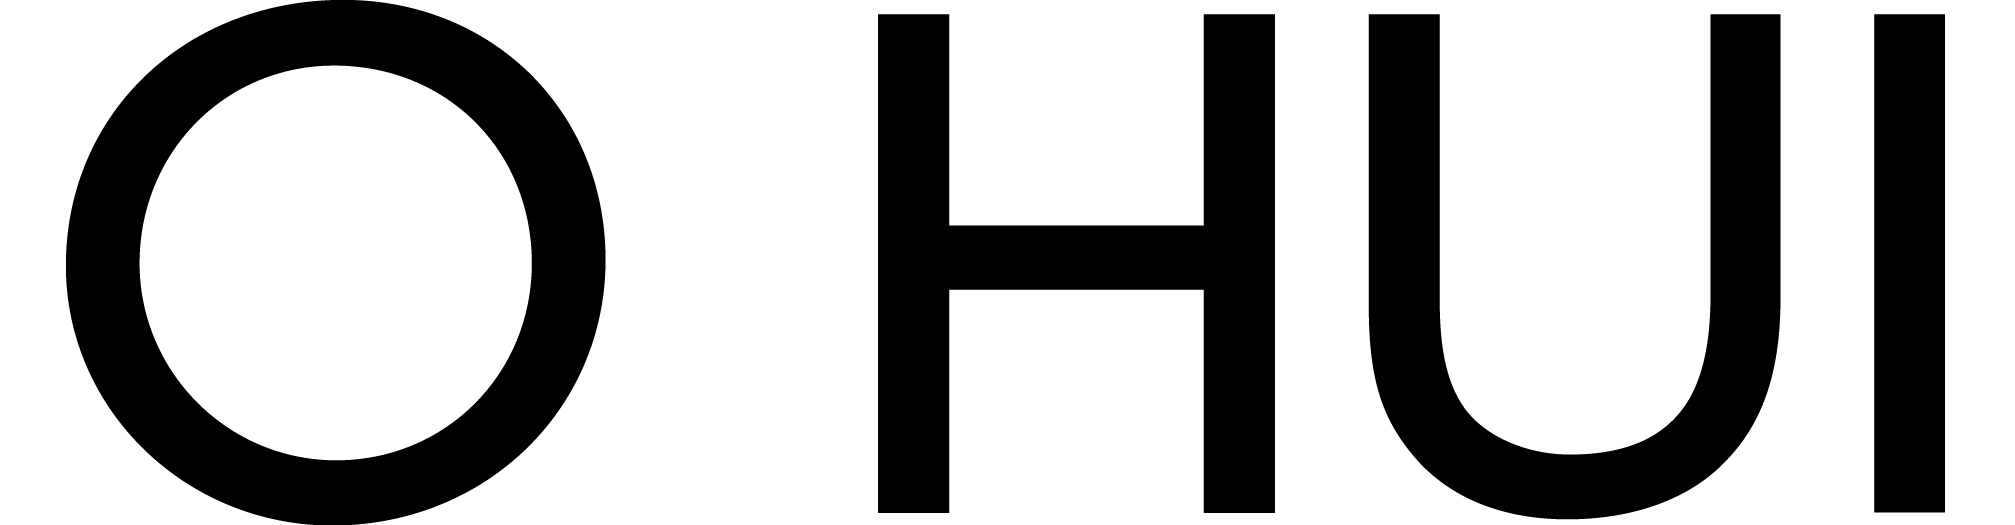 Ohui logo